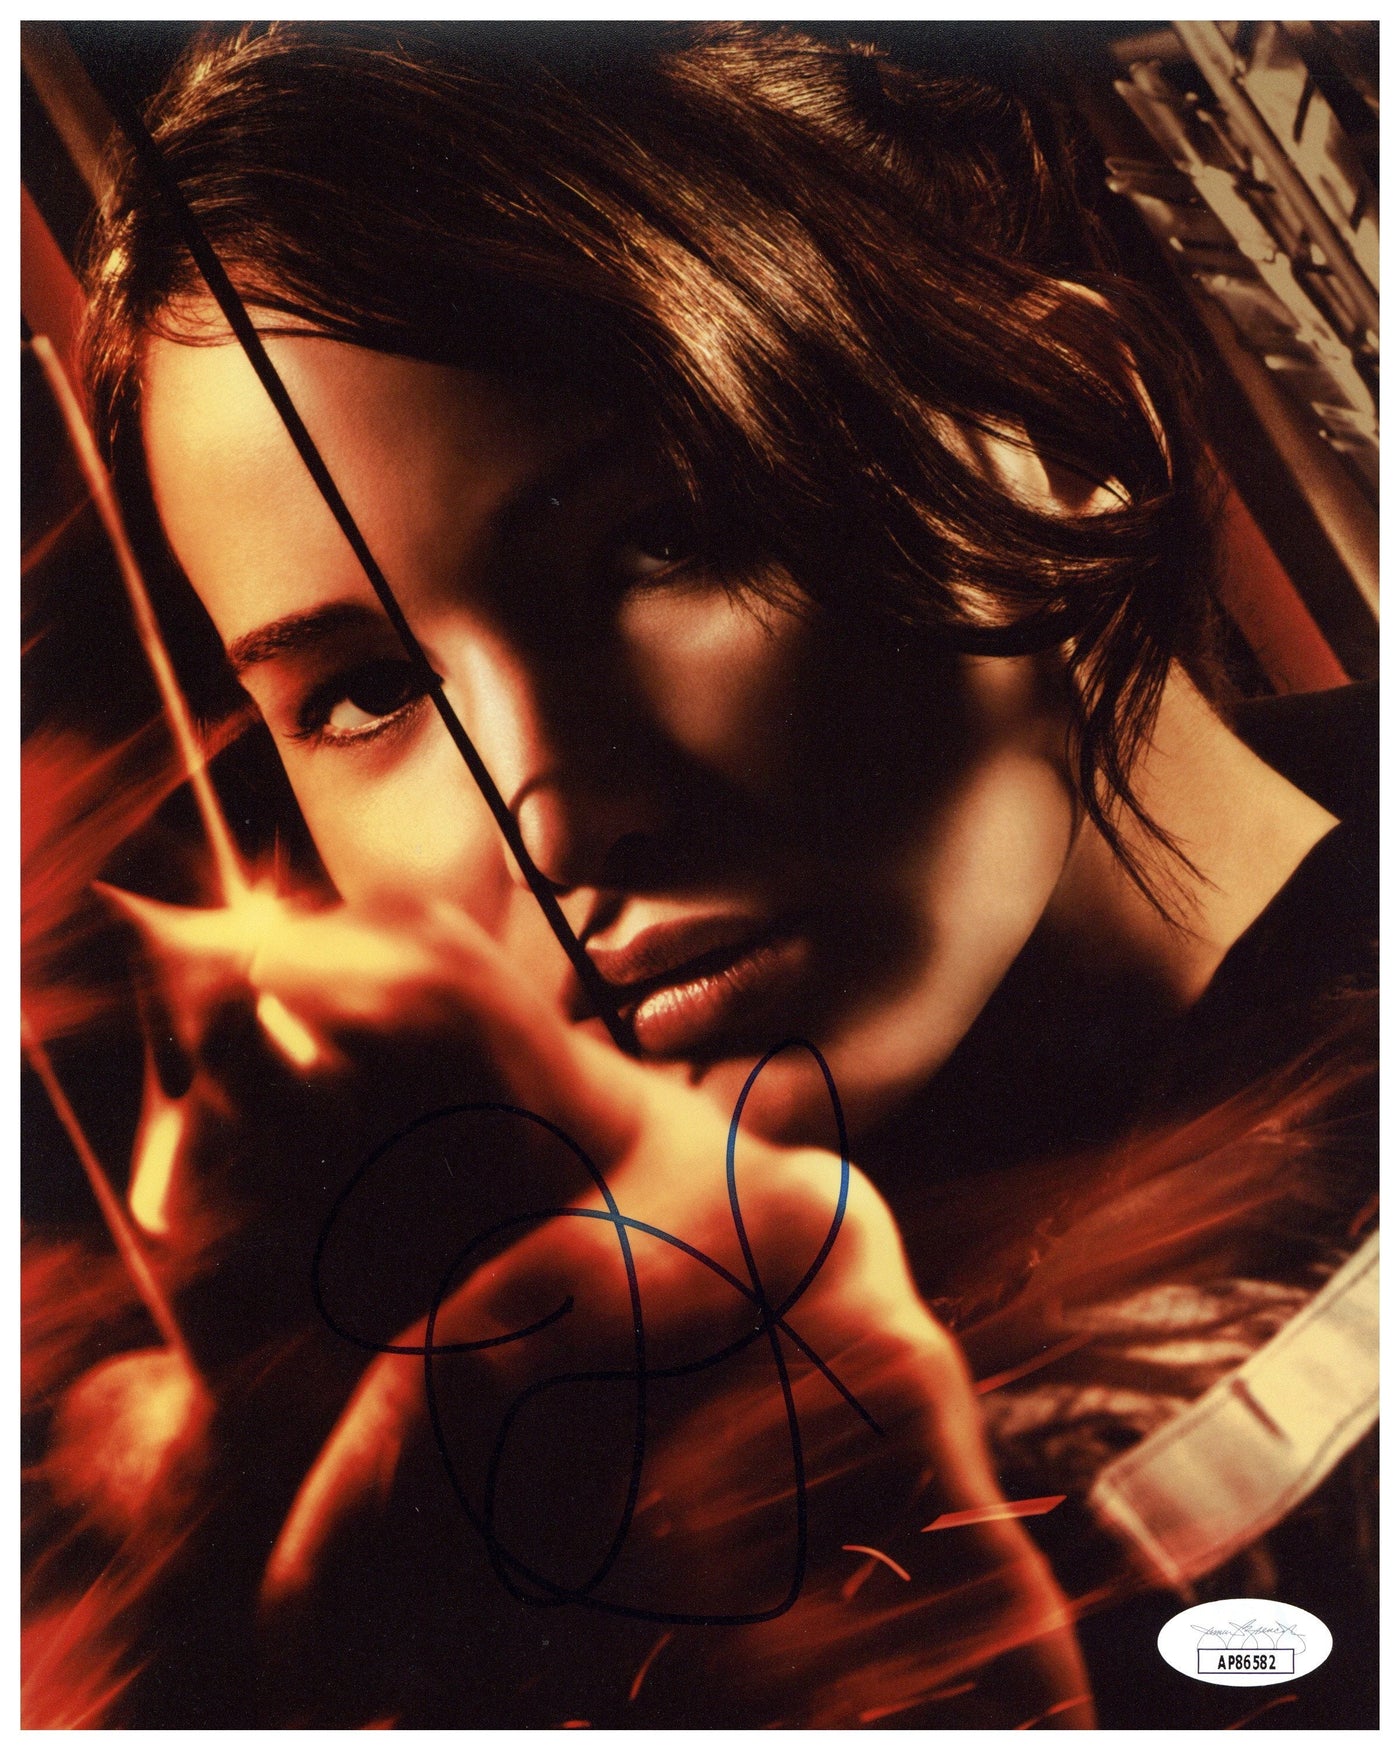 Jennifer Lawrence Signed 8x10 Photo The Hunger Games Autographed JSA COA 2